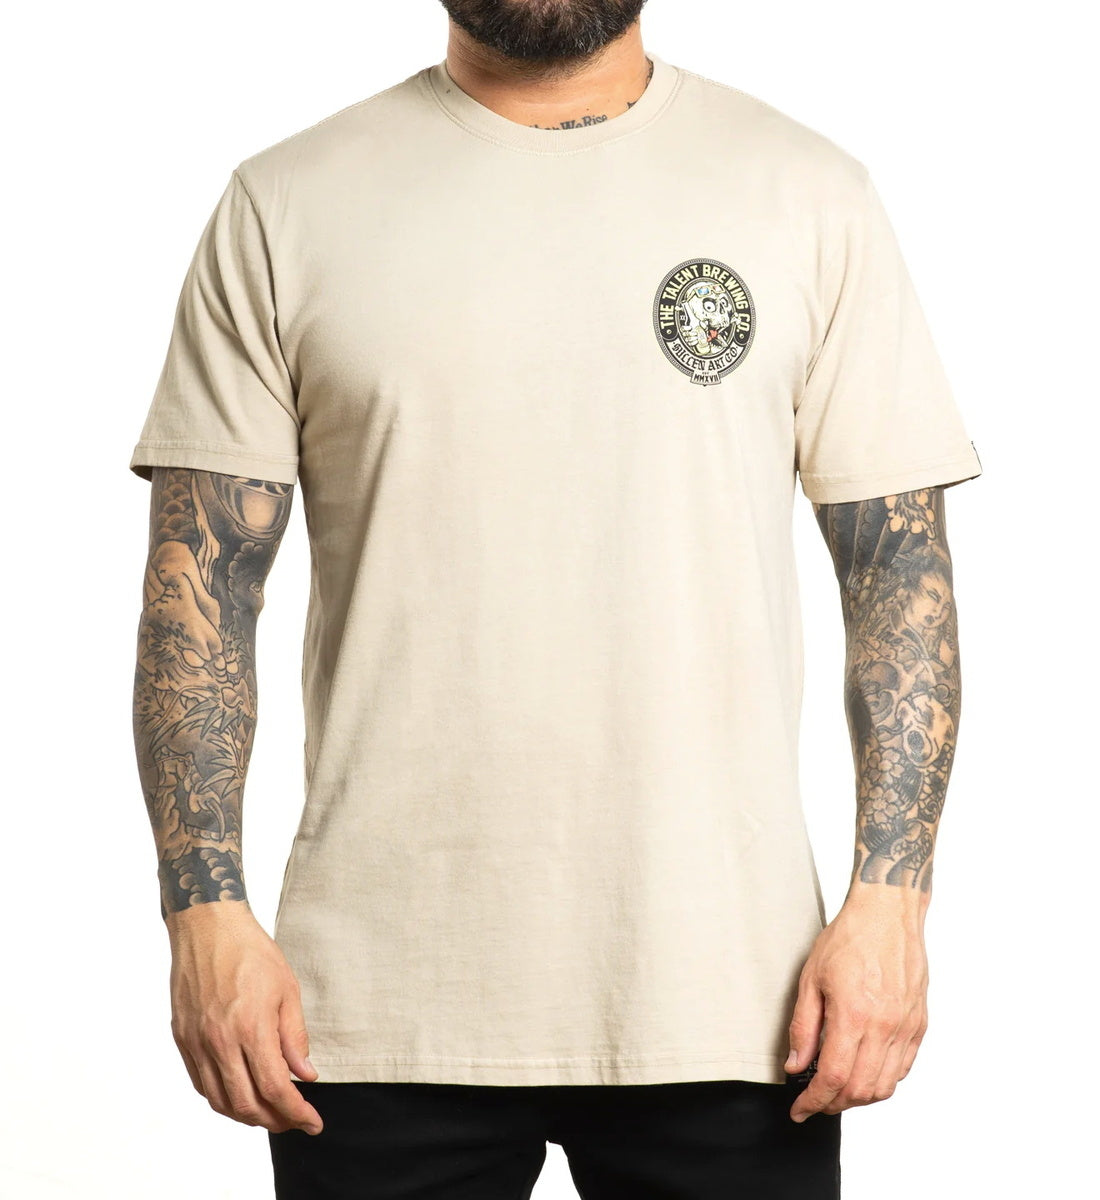 Sullen Clothing T-Shirt- Talent Company- Peyote